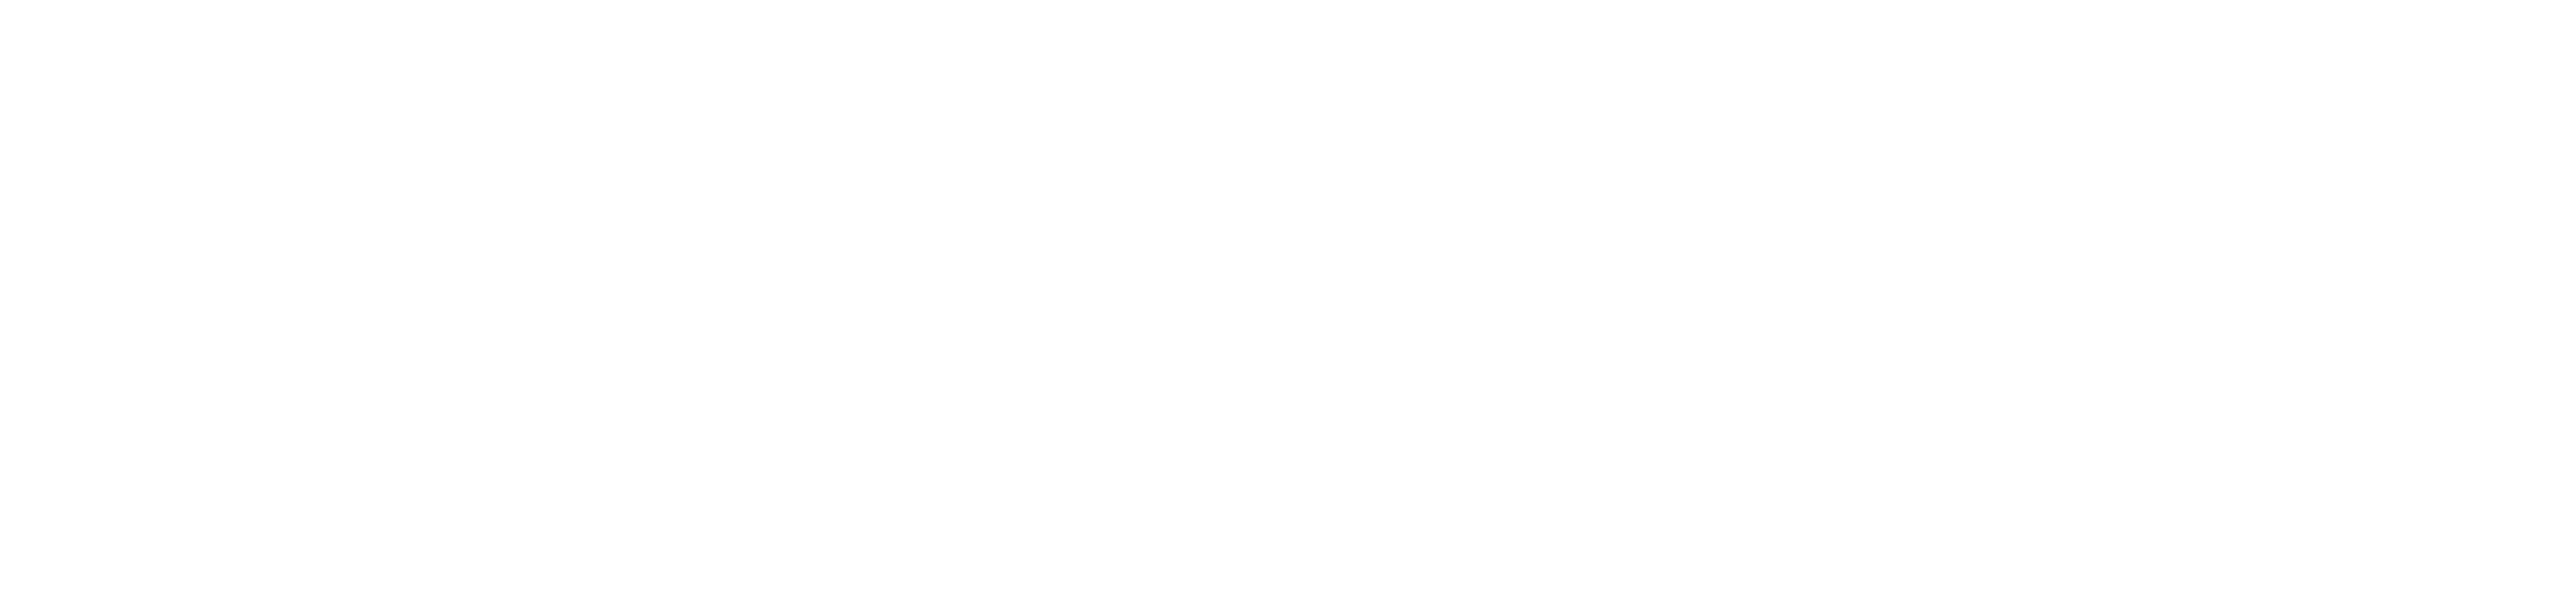 Arabella Black Angel